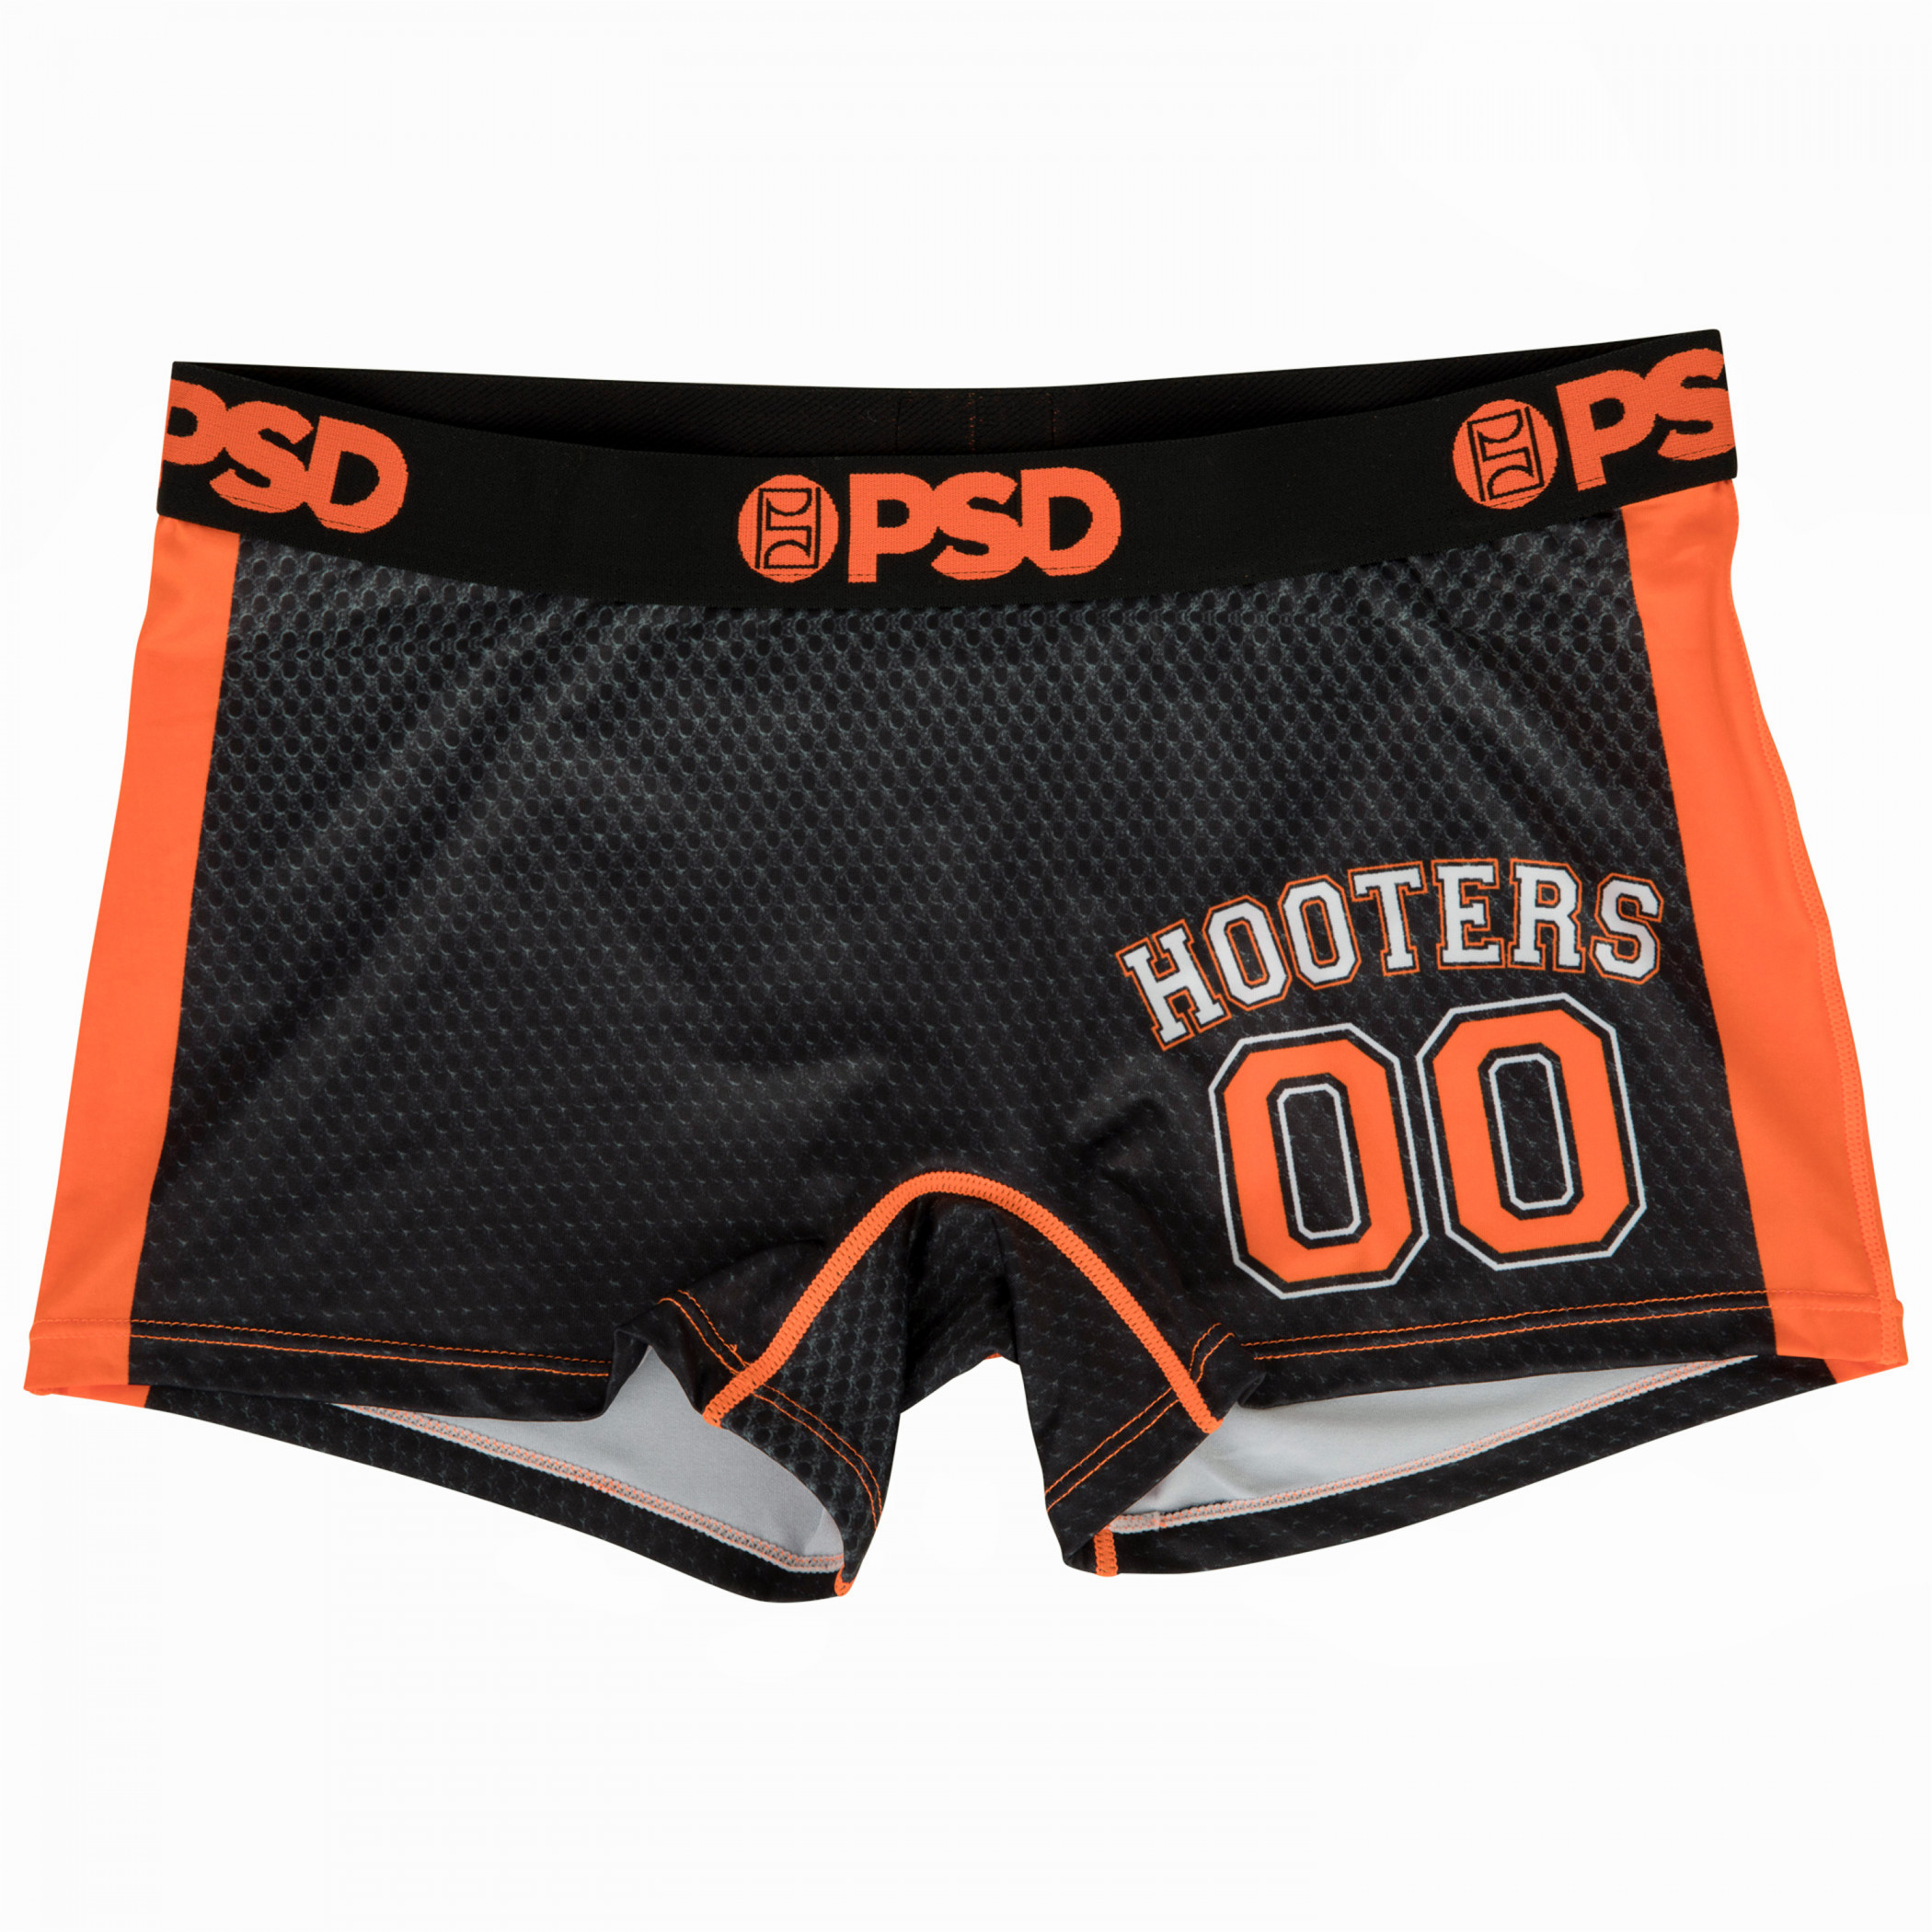 PSD Hooters Uniform Black Sports Bra